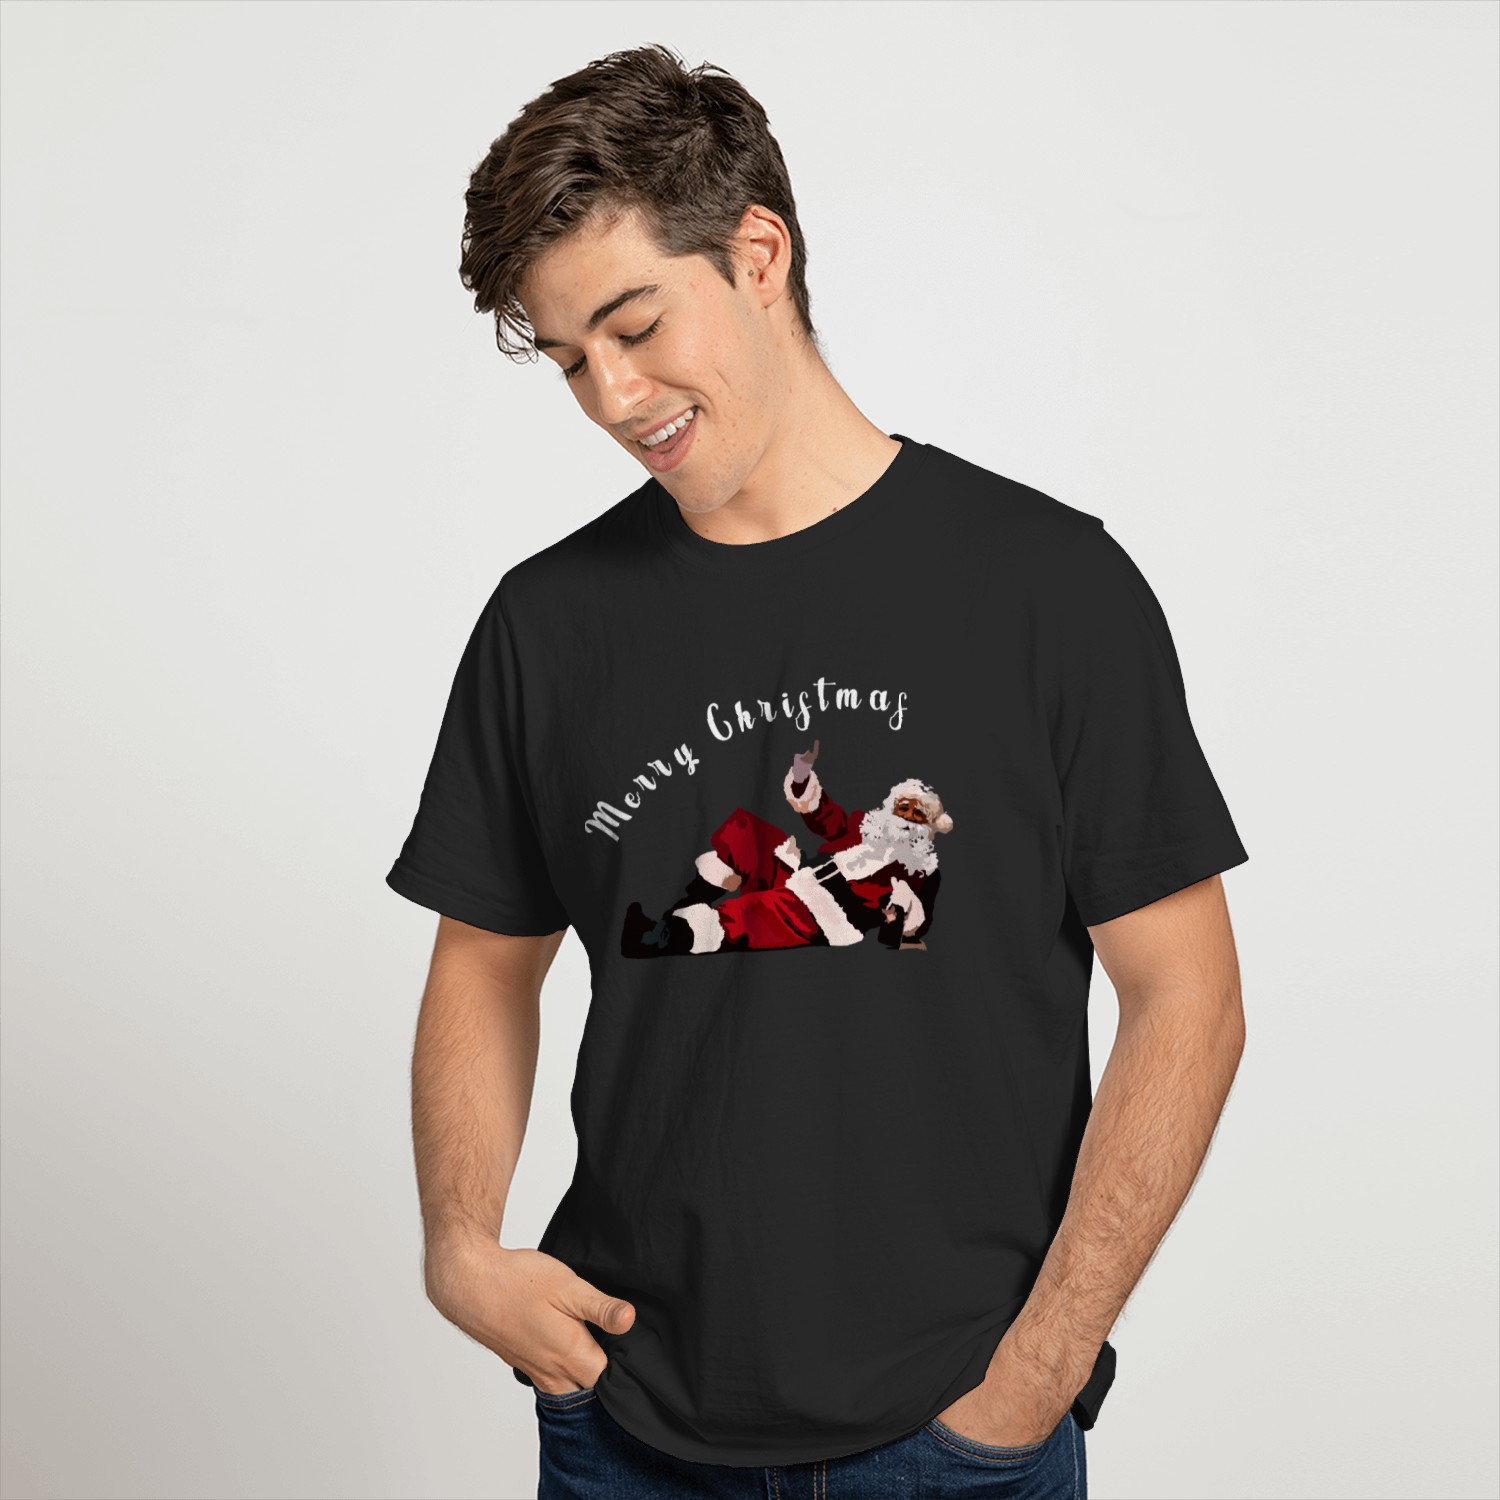 Santa Claus with a bottle T-shirt